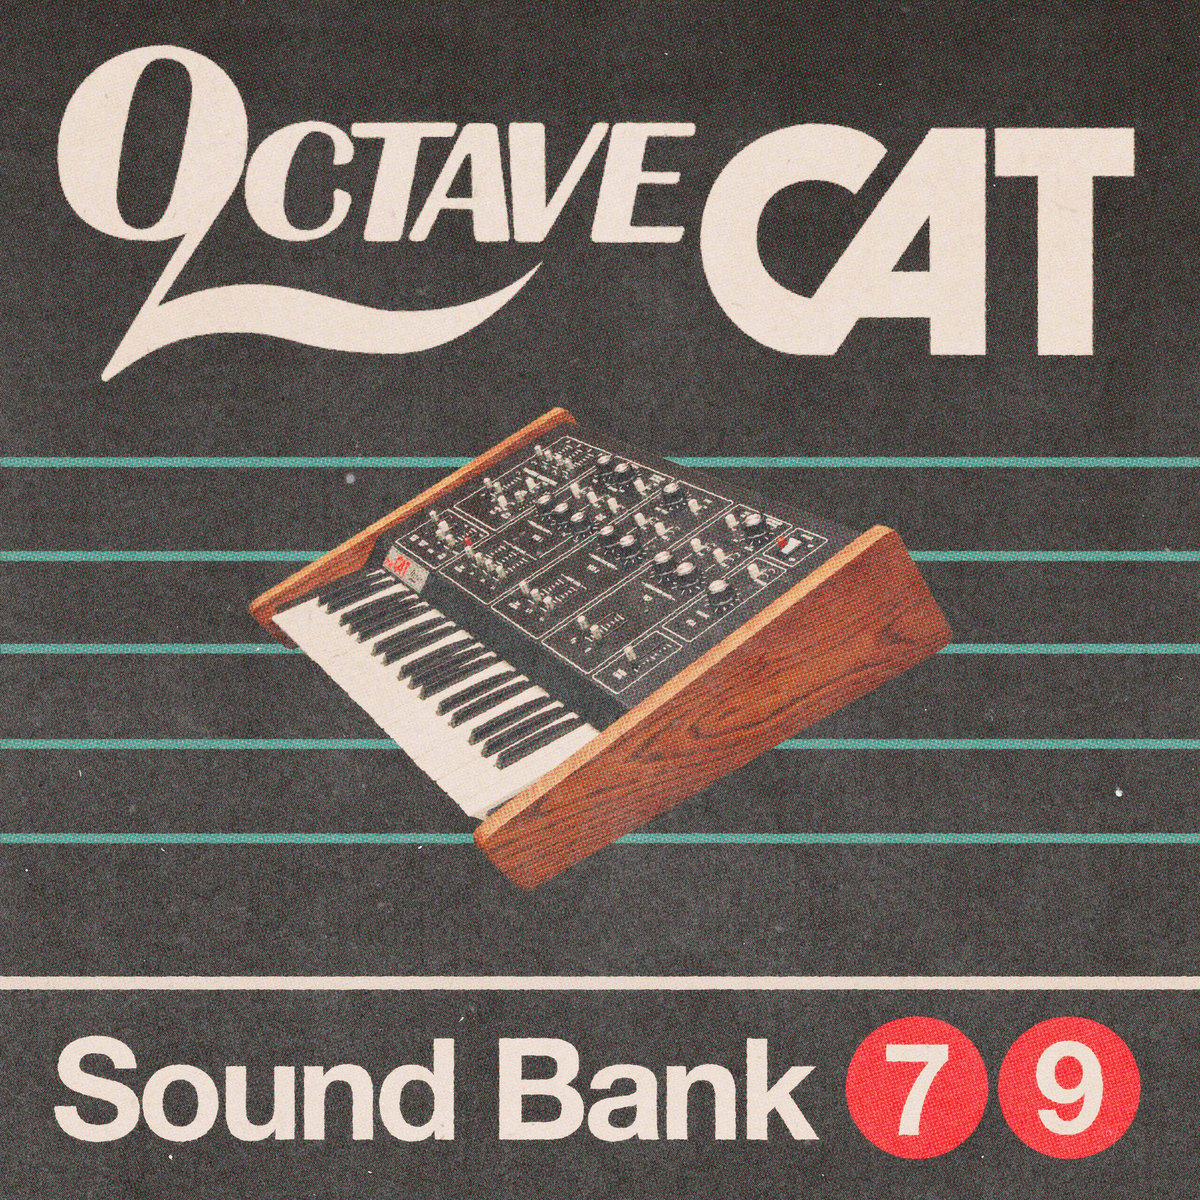 Image of Cherry Audio Octave Cat - Sound Bank '79